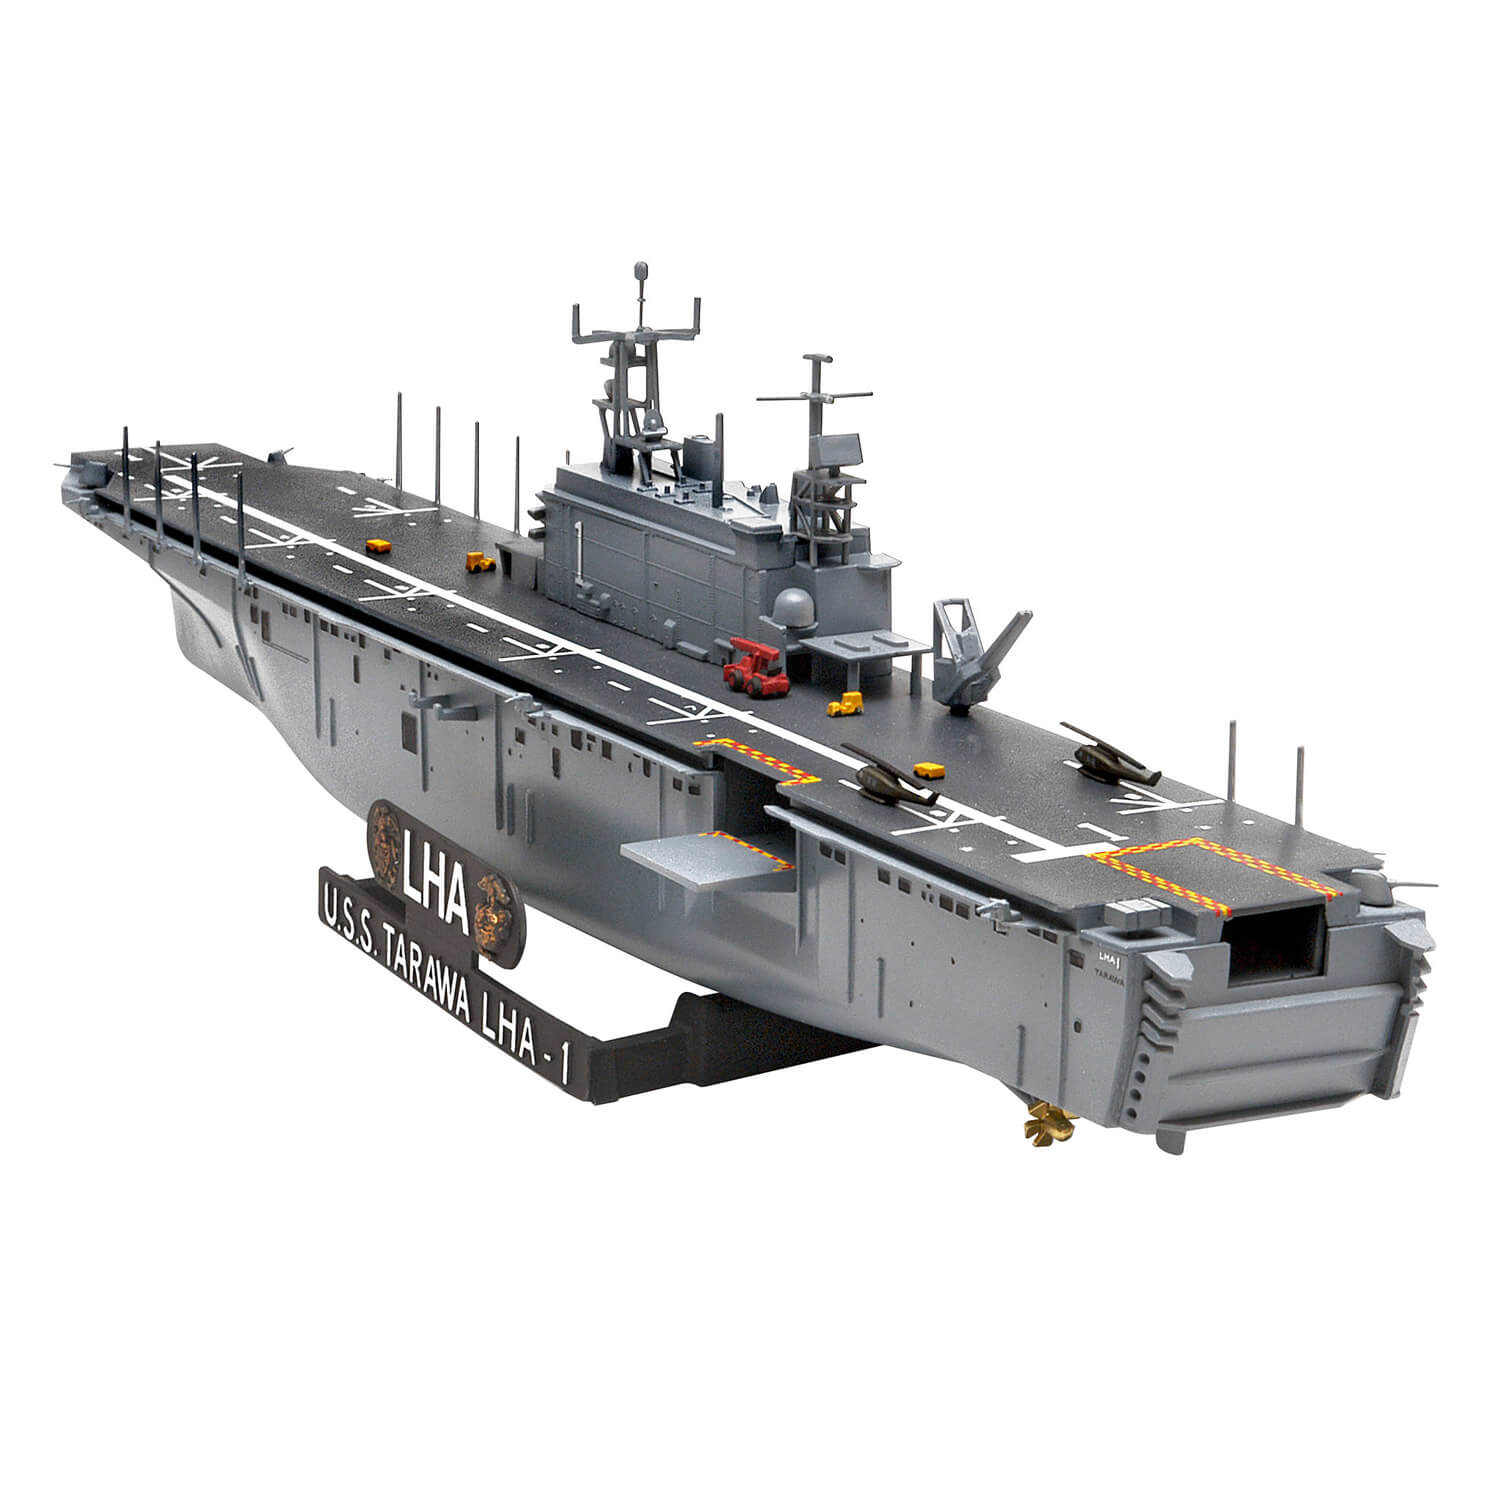 Revell 05170 USS Tarawa LHA-1 Assault Ship Plastic Model Kit Scale 1:720 34.7cm